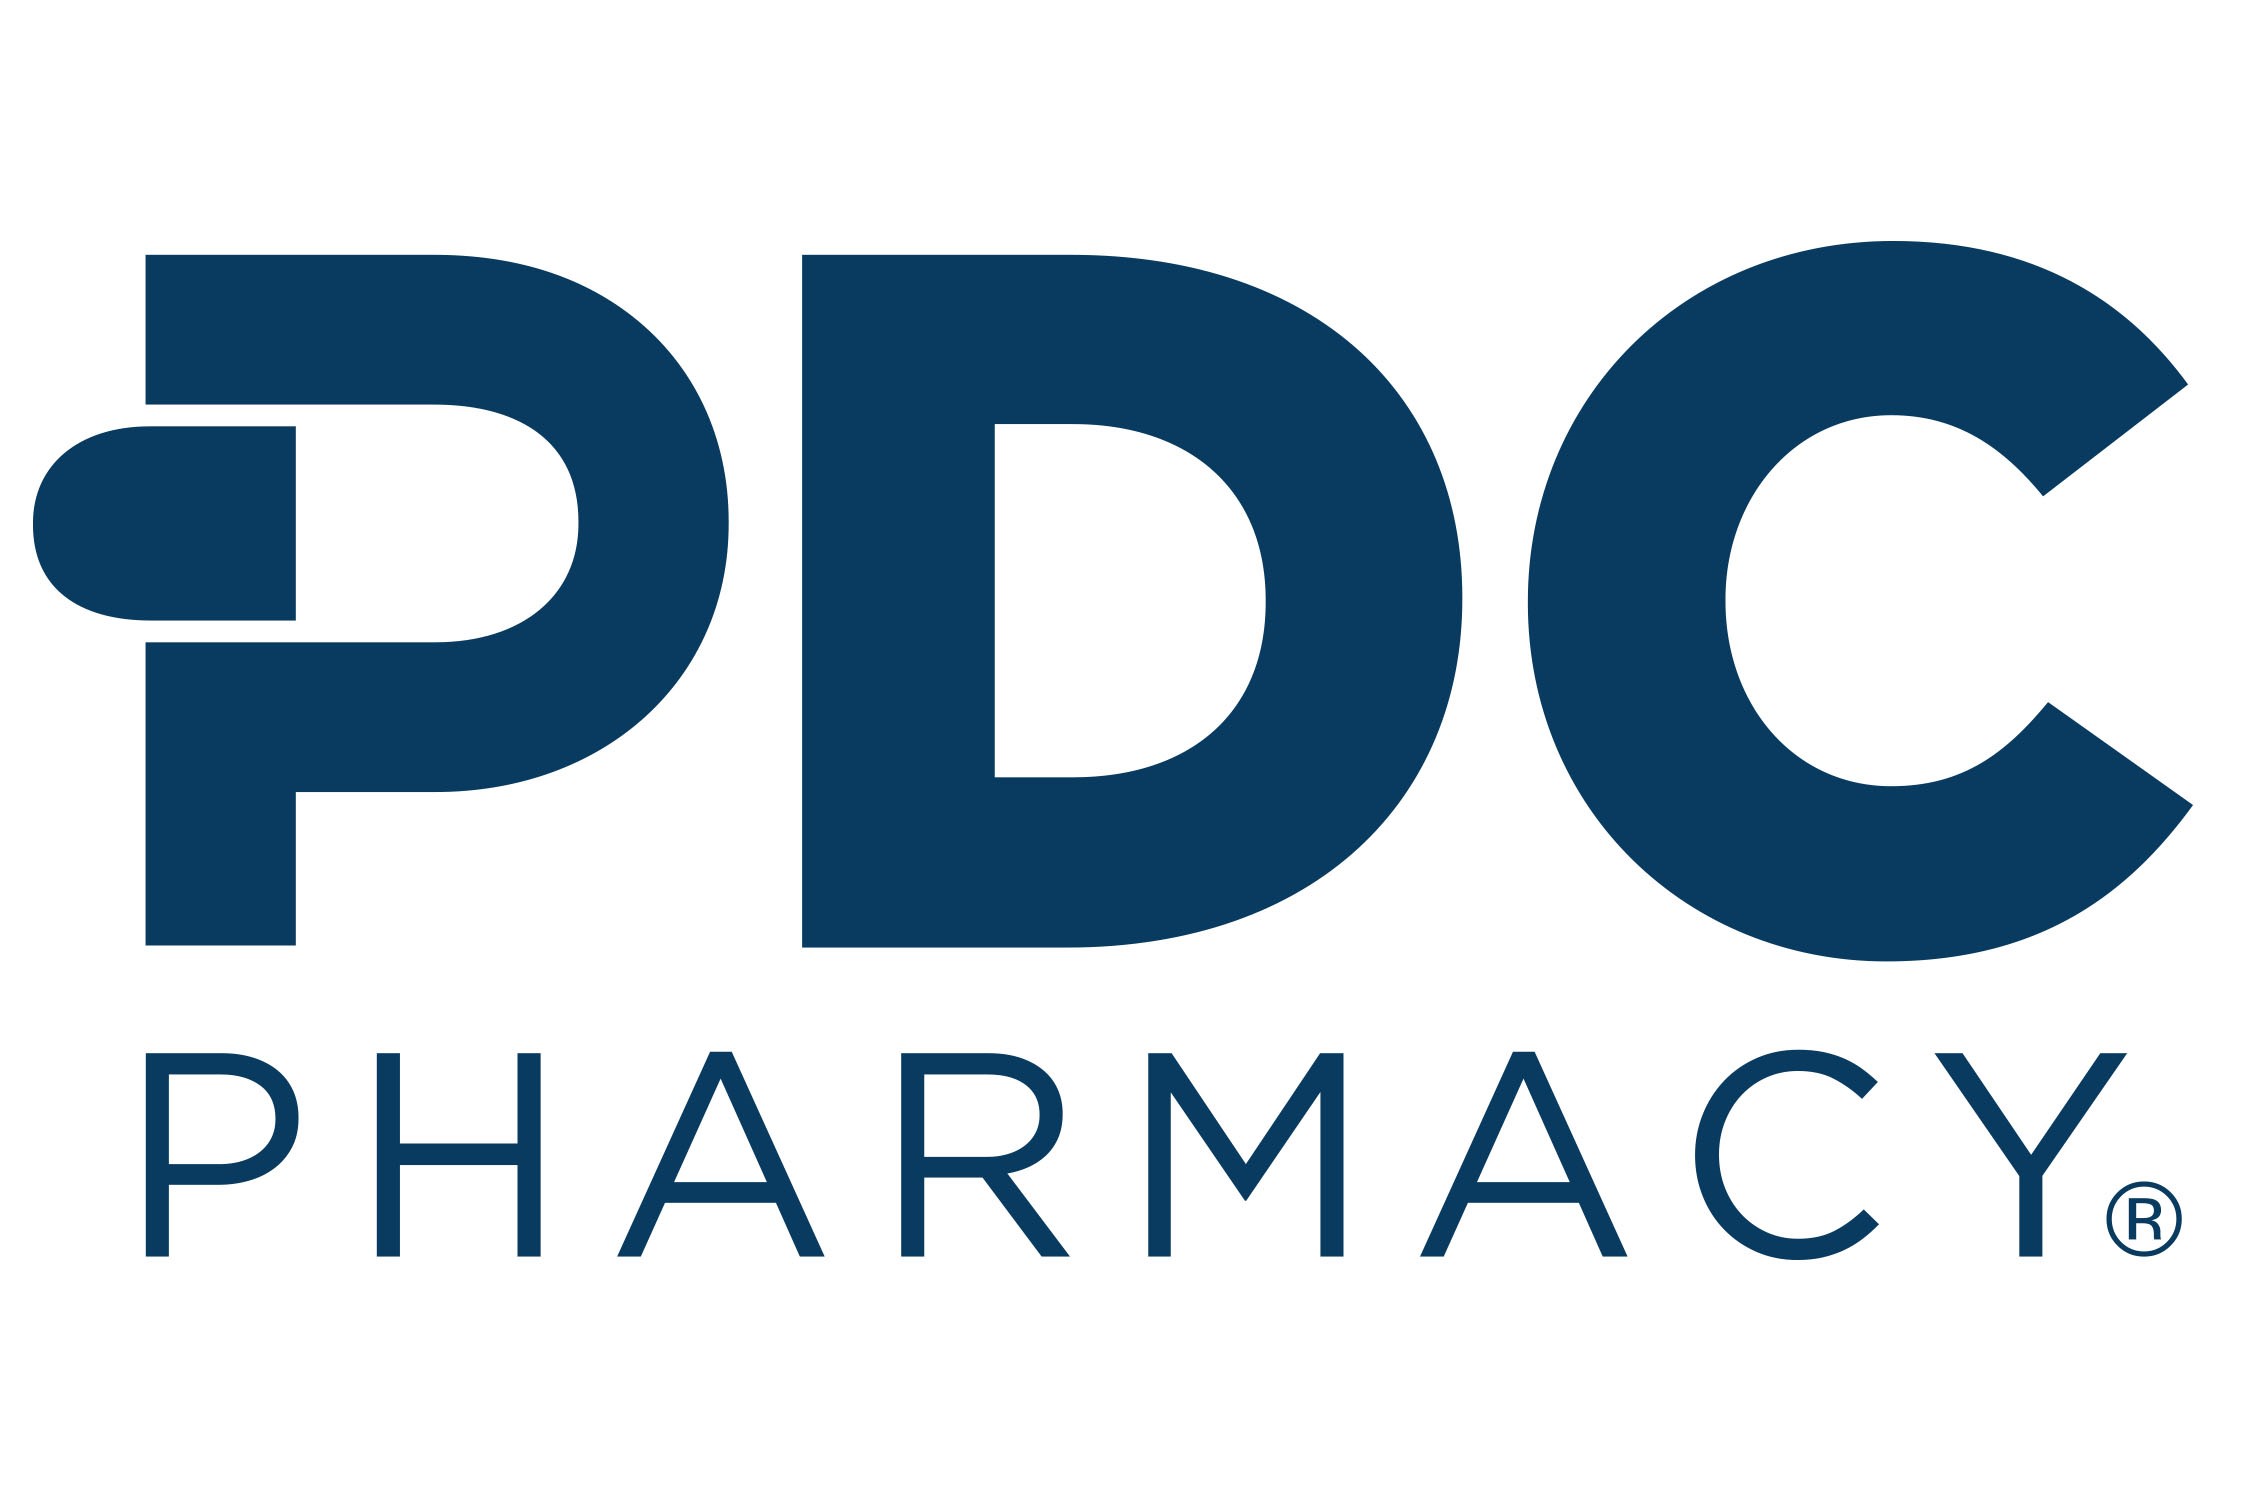 PDC Pharmacy